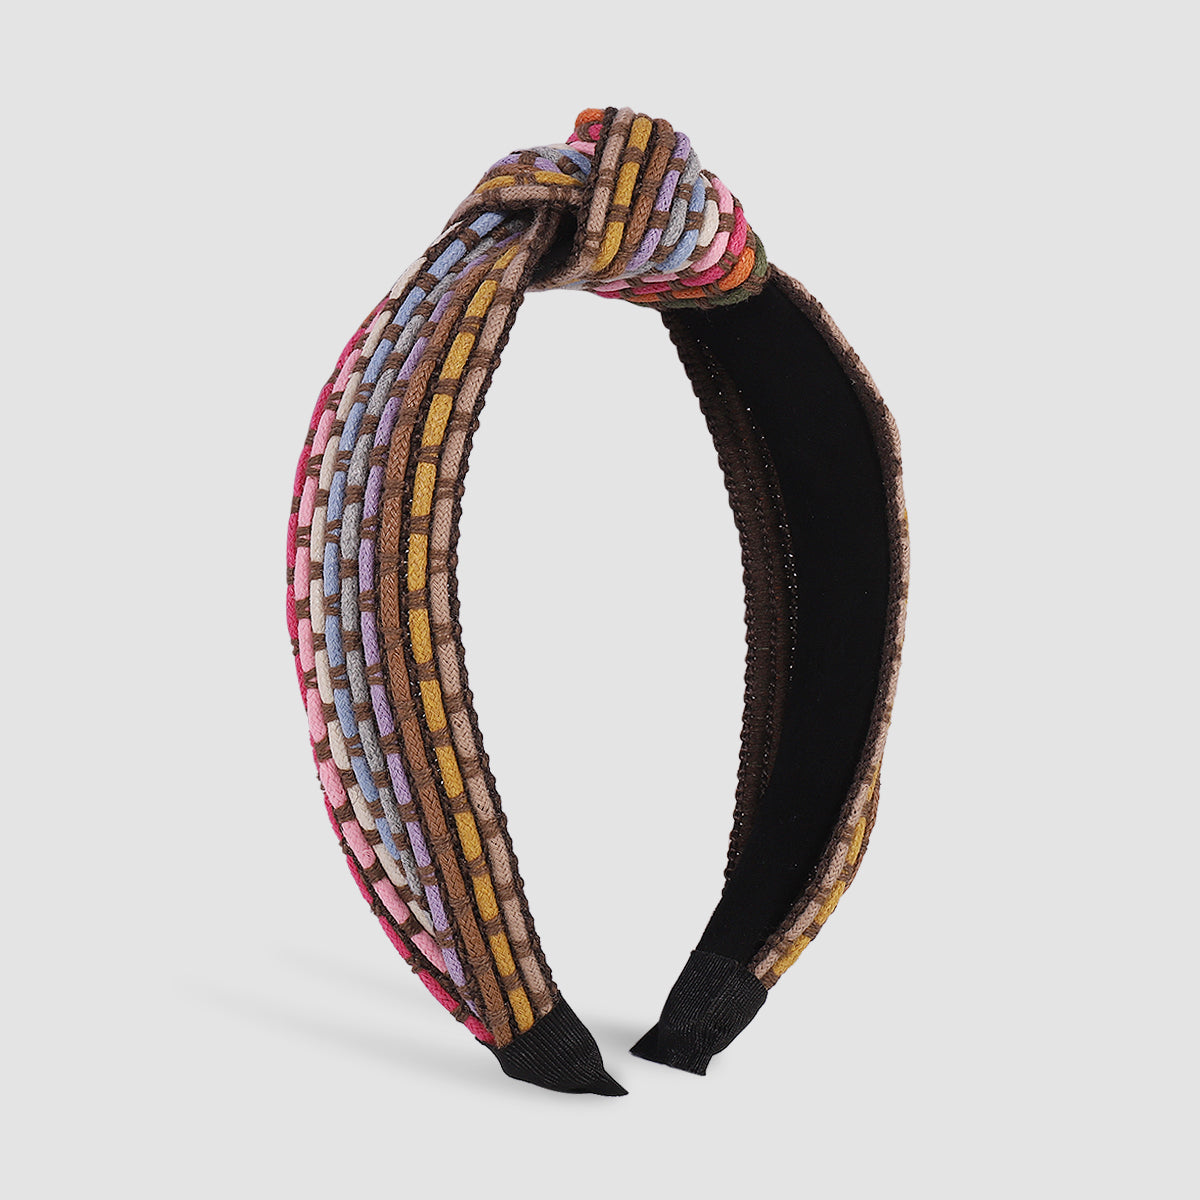 Rainbow Rope Braided Wide Brim Casual Headband medyjewelry